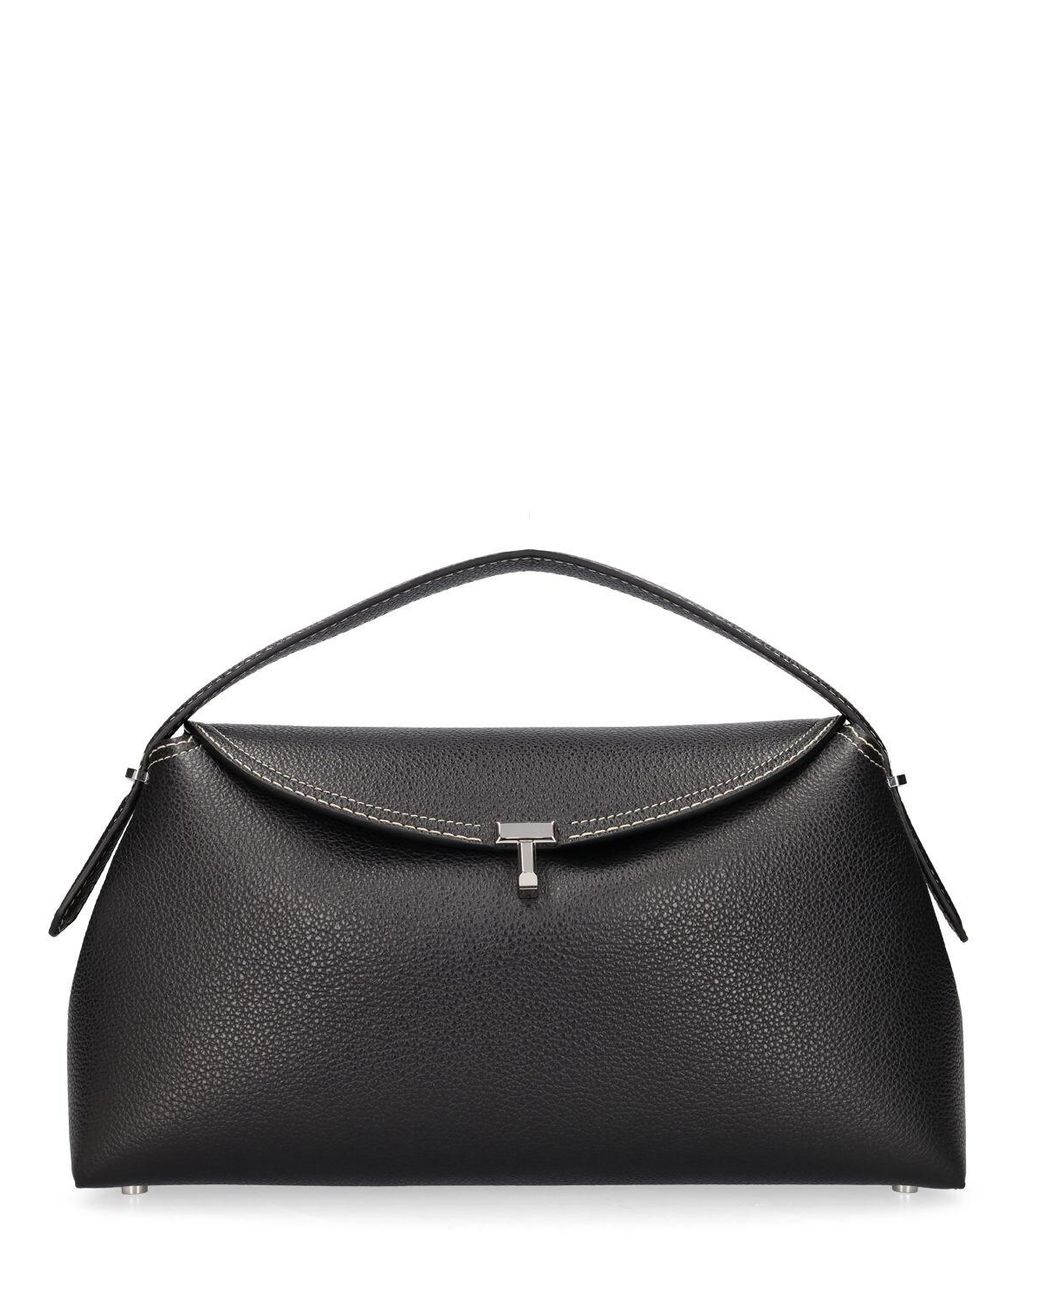 Totême T-lock Leather Top Handle Bag in Black | Lyst Canada